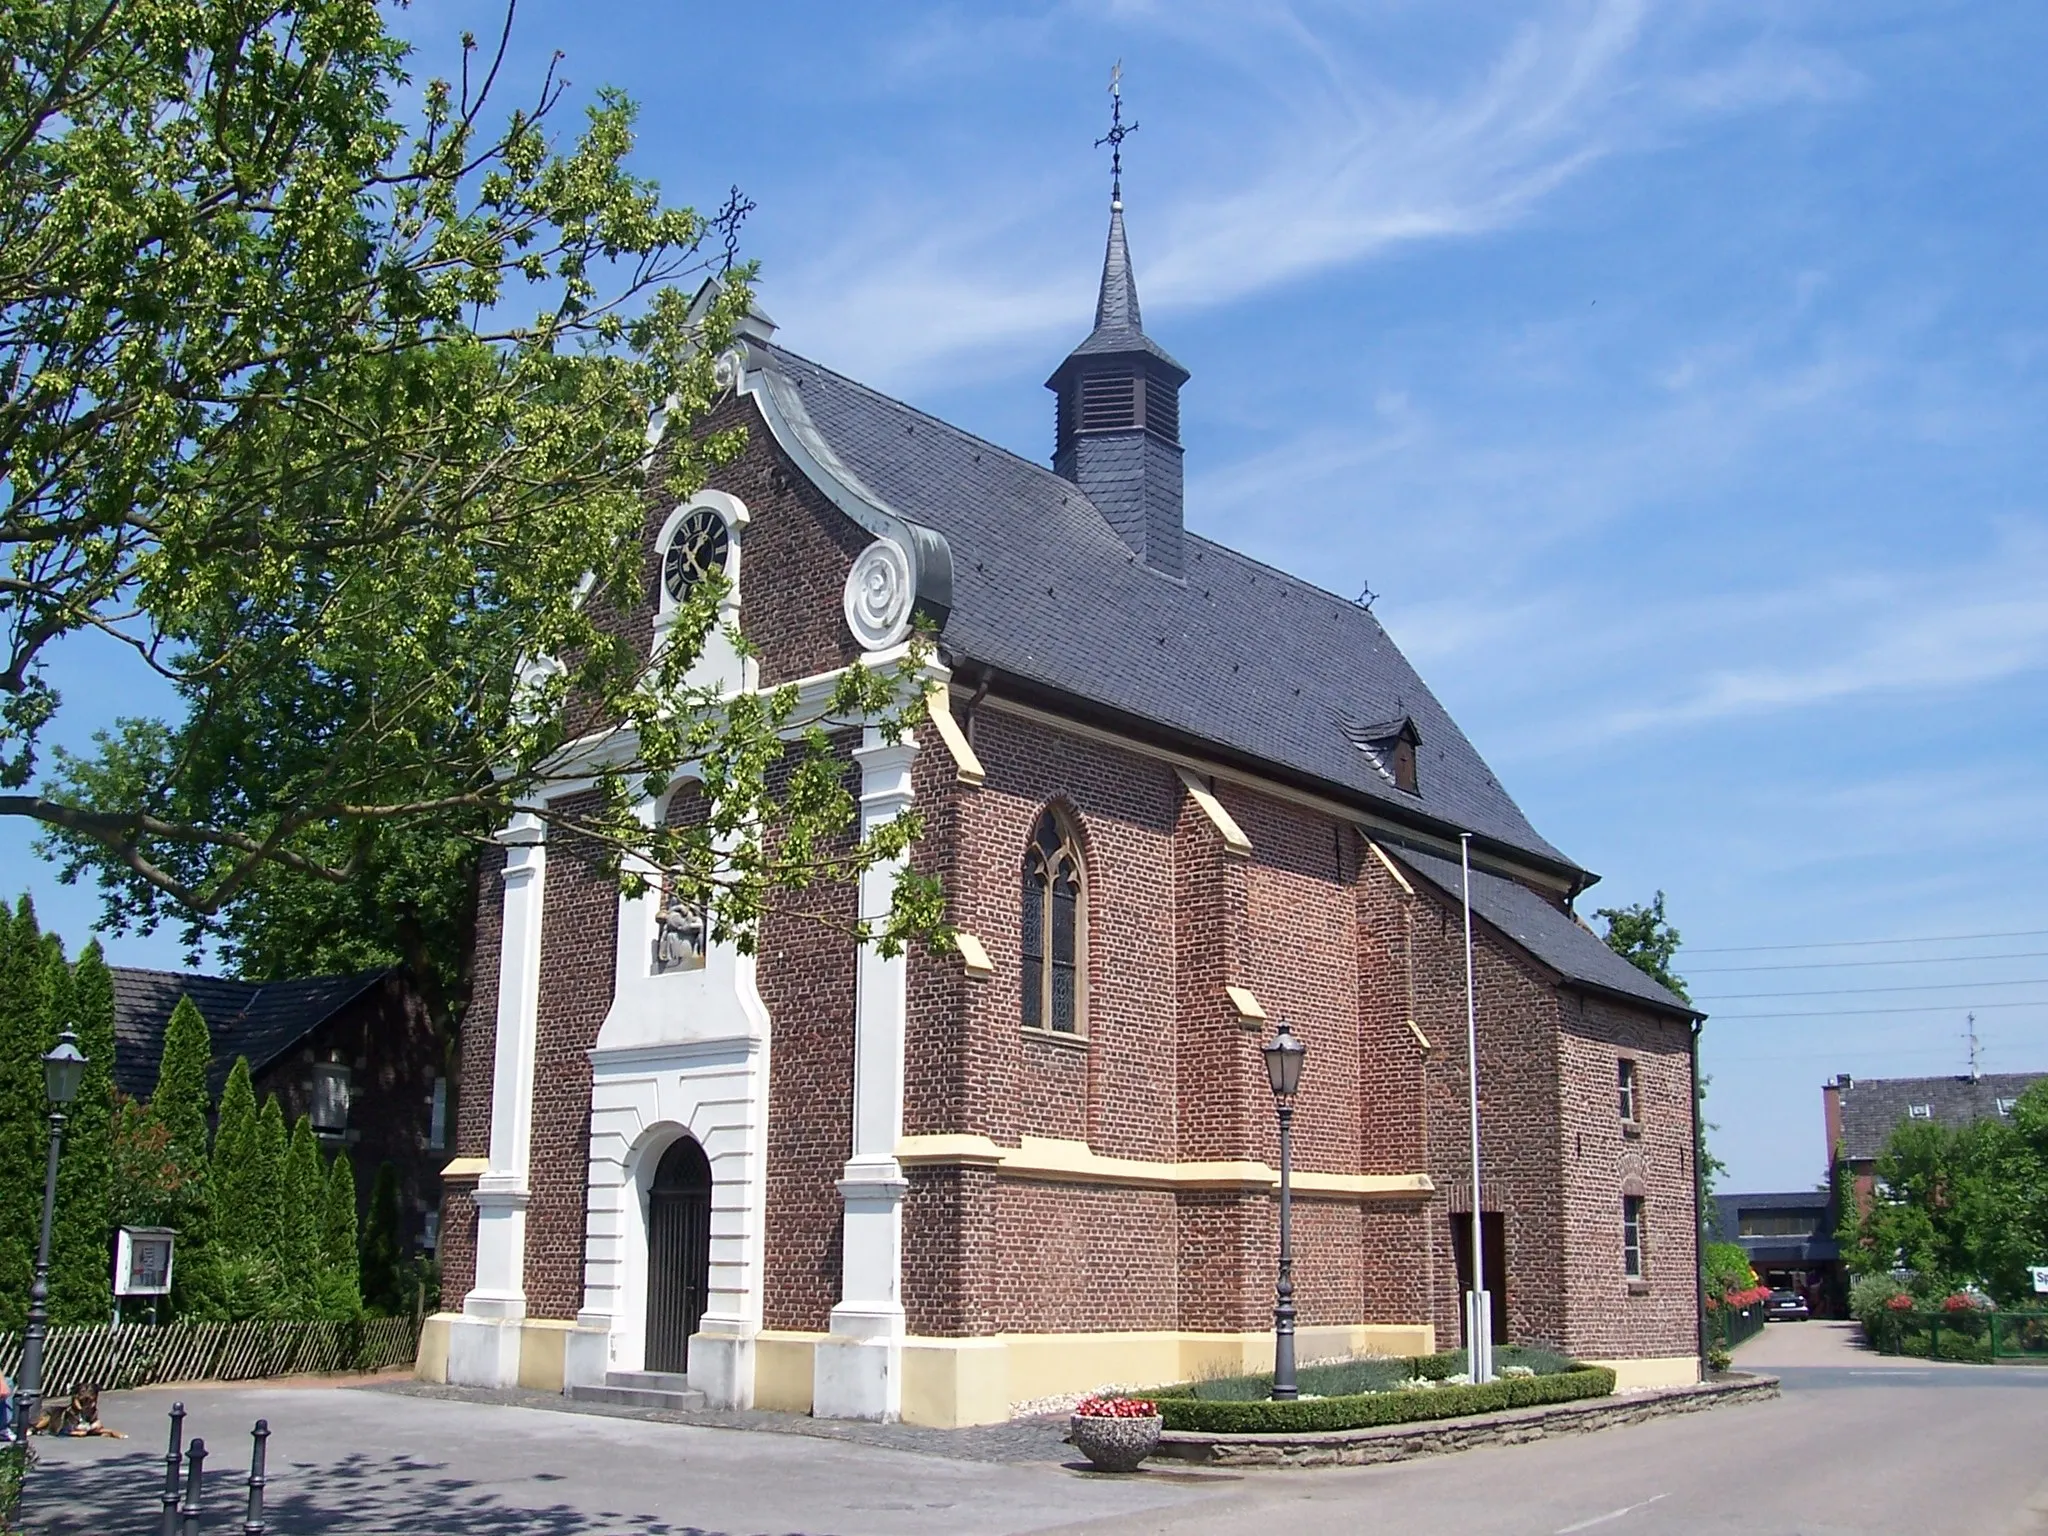 Photo showing: Pilgrimage church in Aengenesch, Geldern, Germany